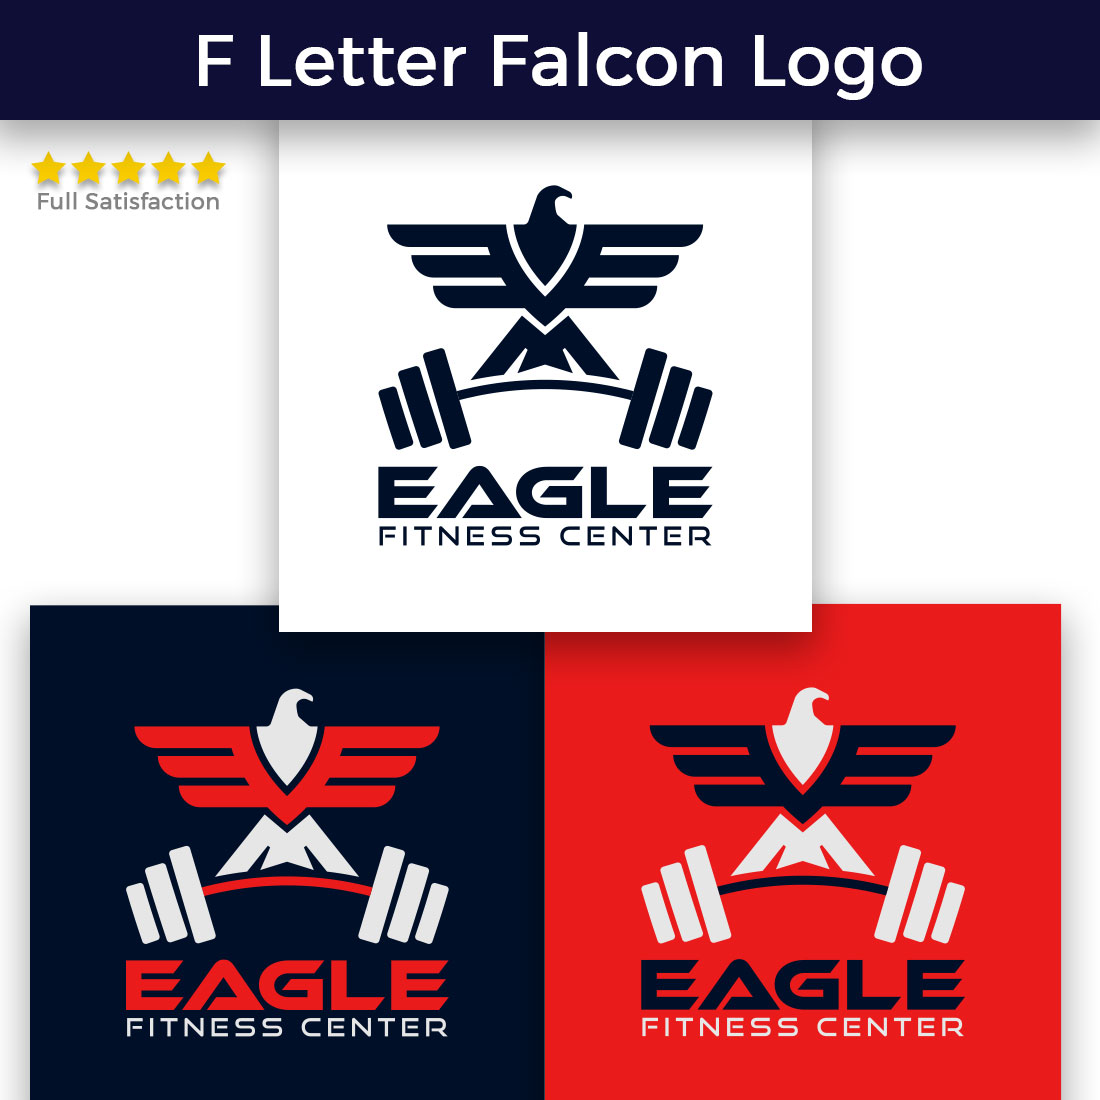 Fitness Eagle Logo Design cover image.